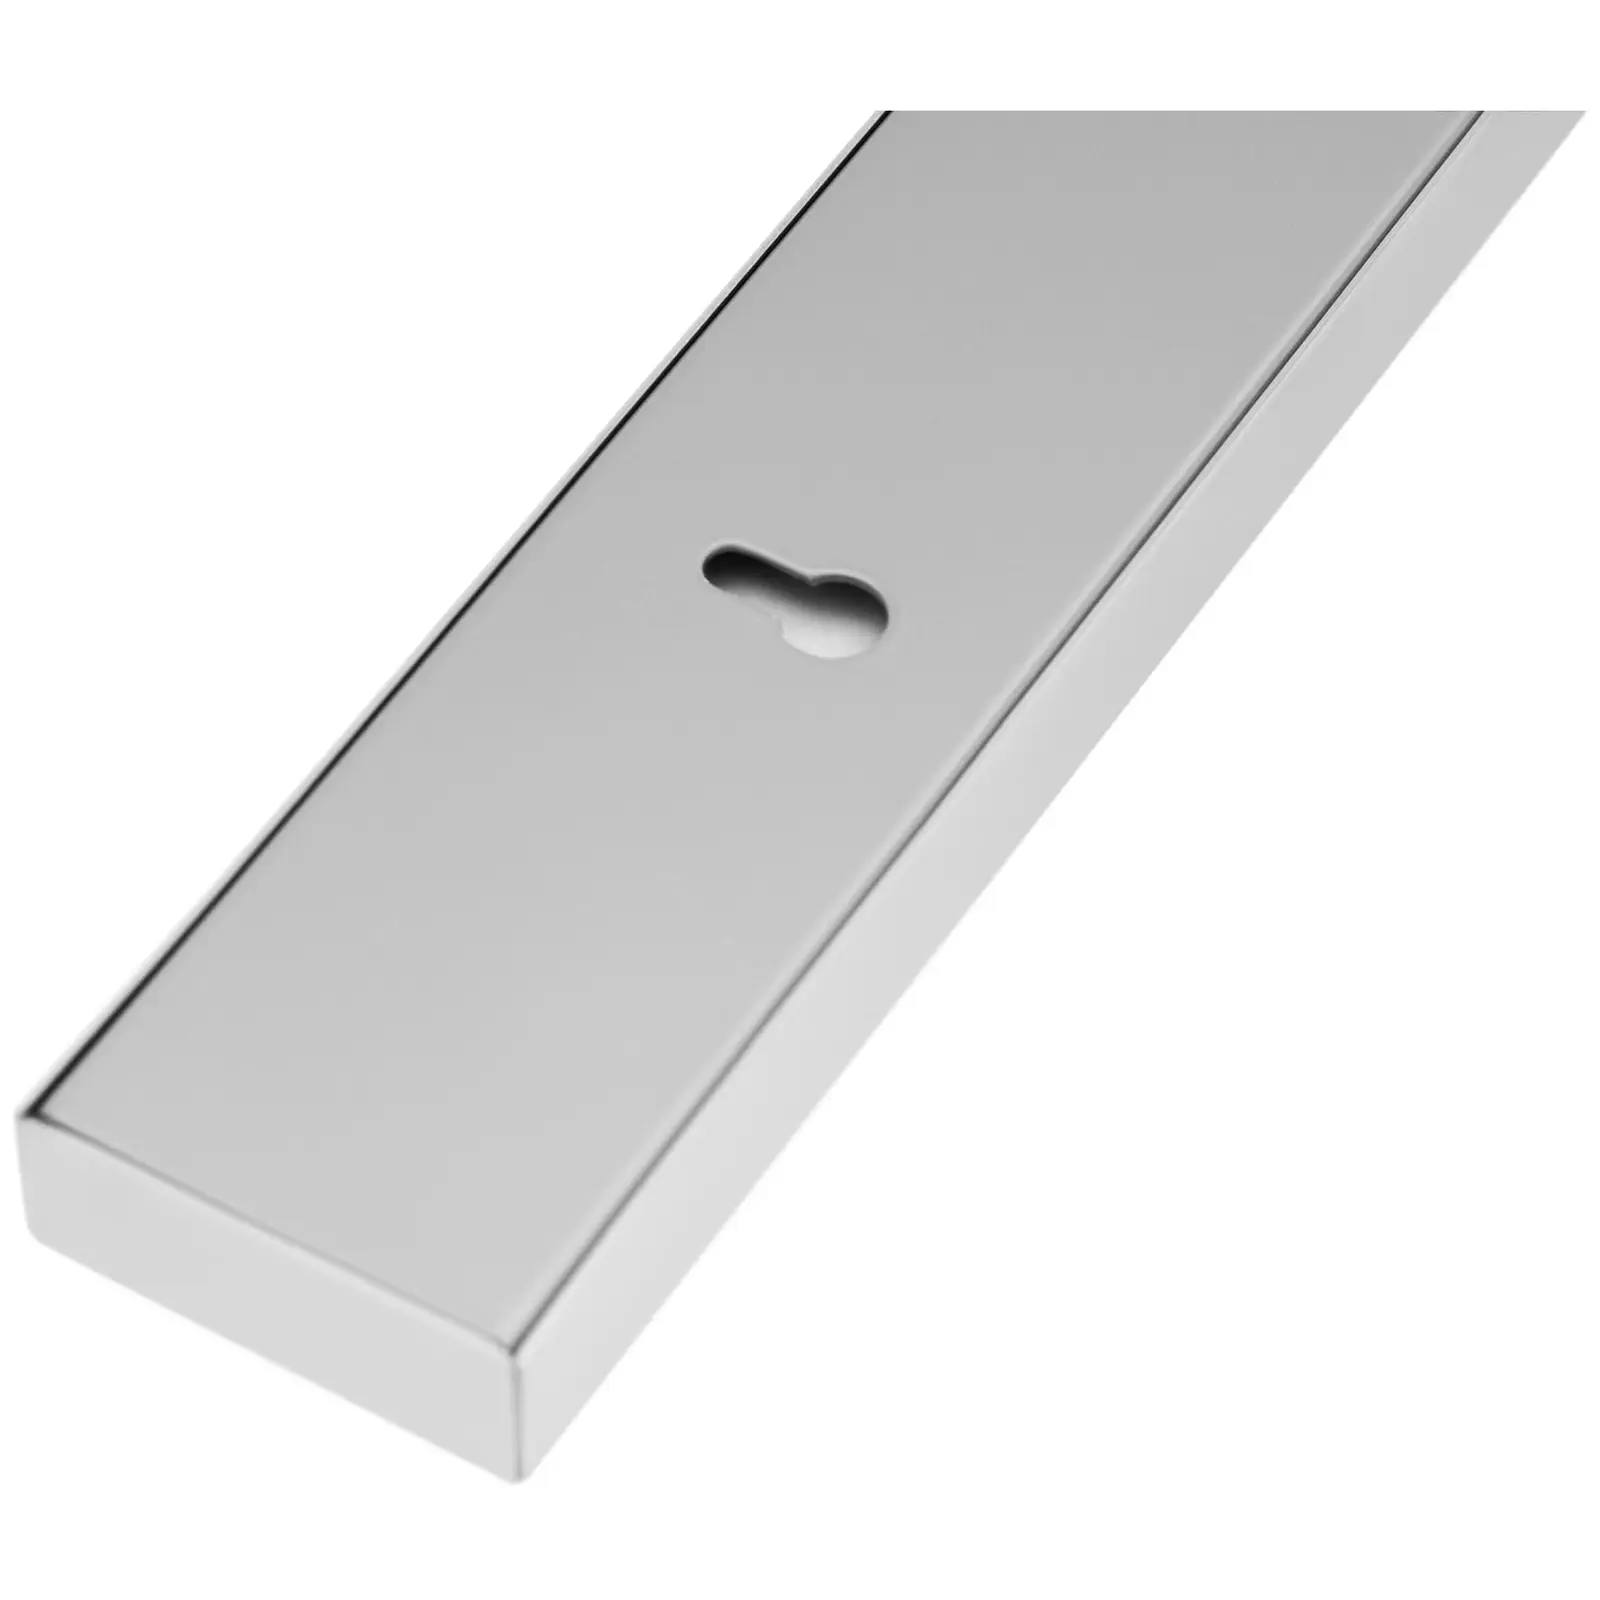 Magnetleiste für Messer - Edelstahl / Ferritmagnet - 44.5 x 4.5 x 2 cm